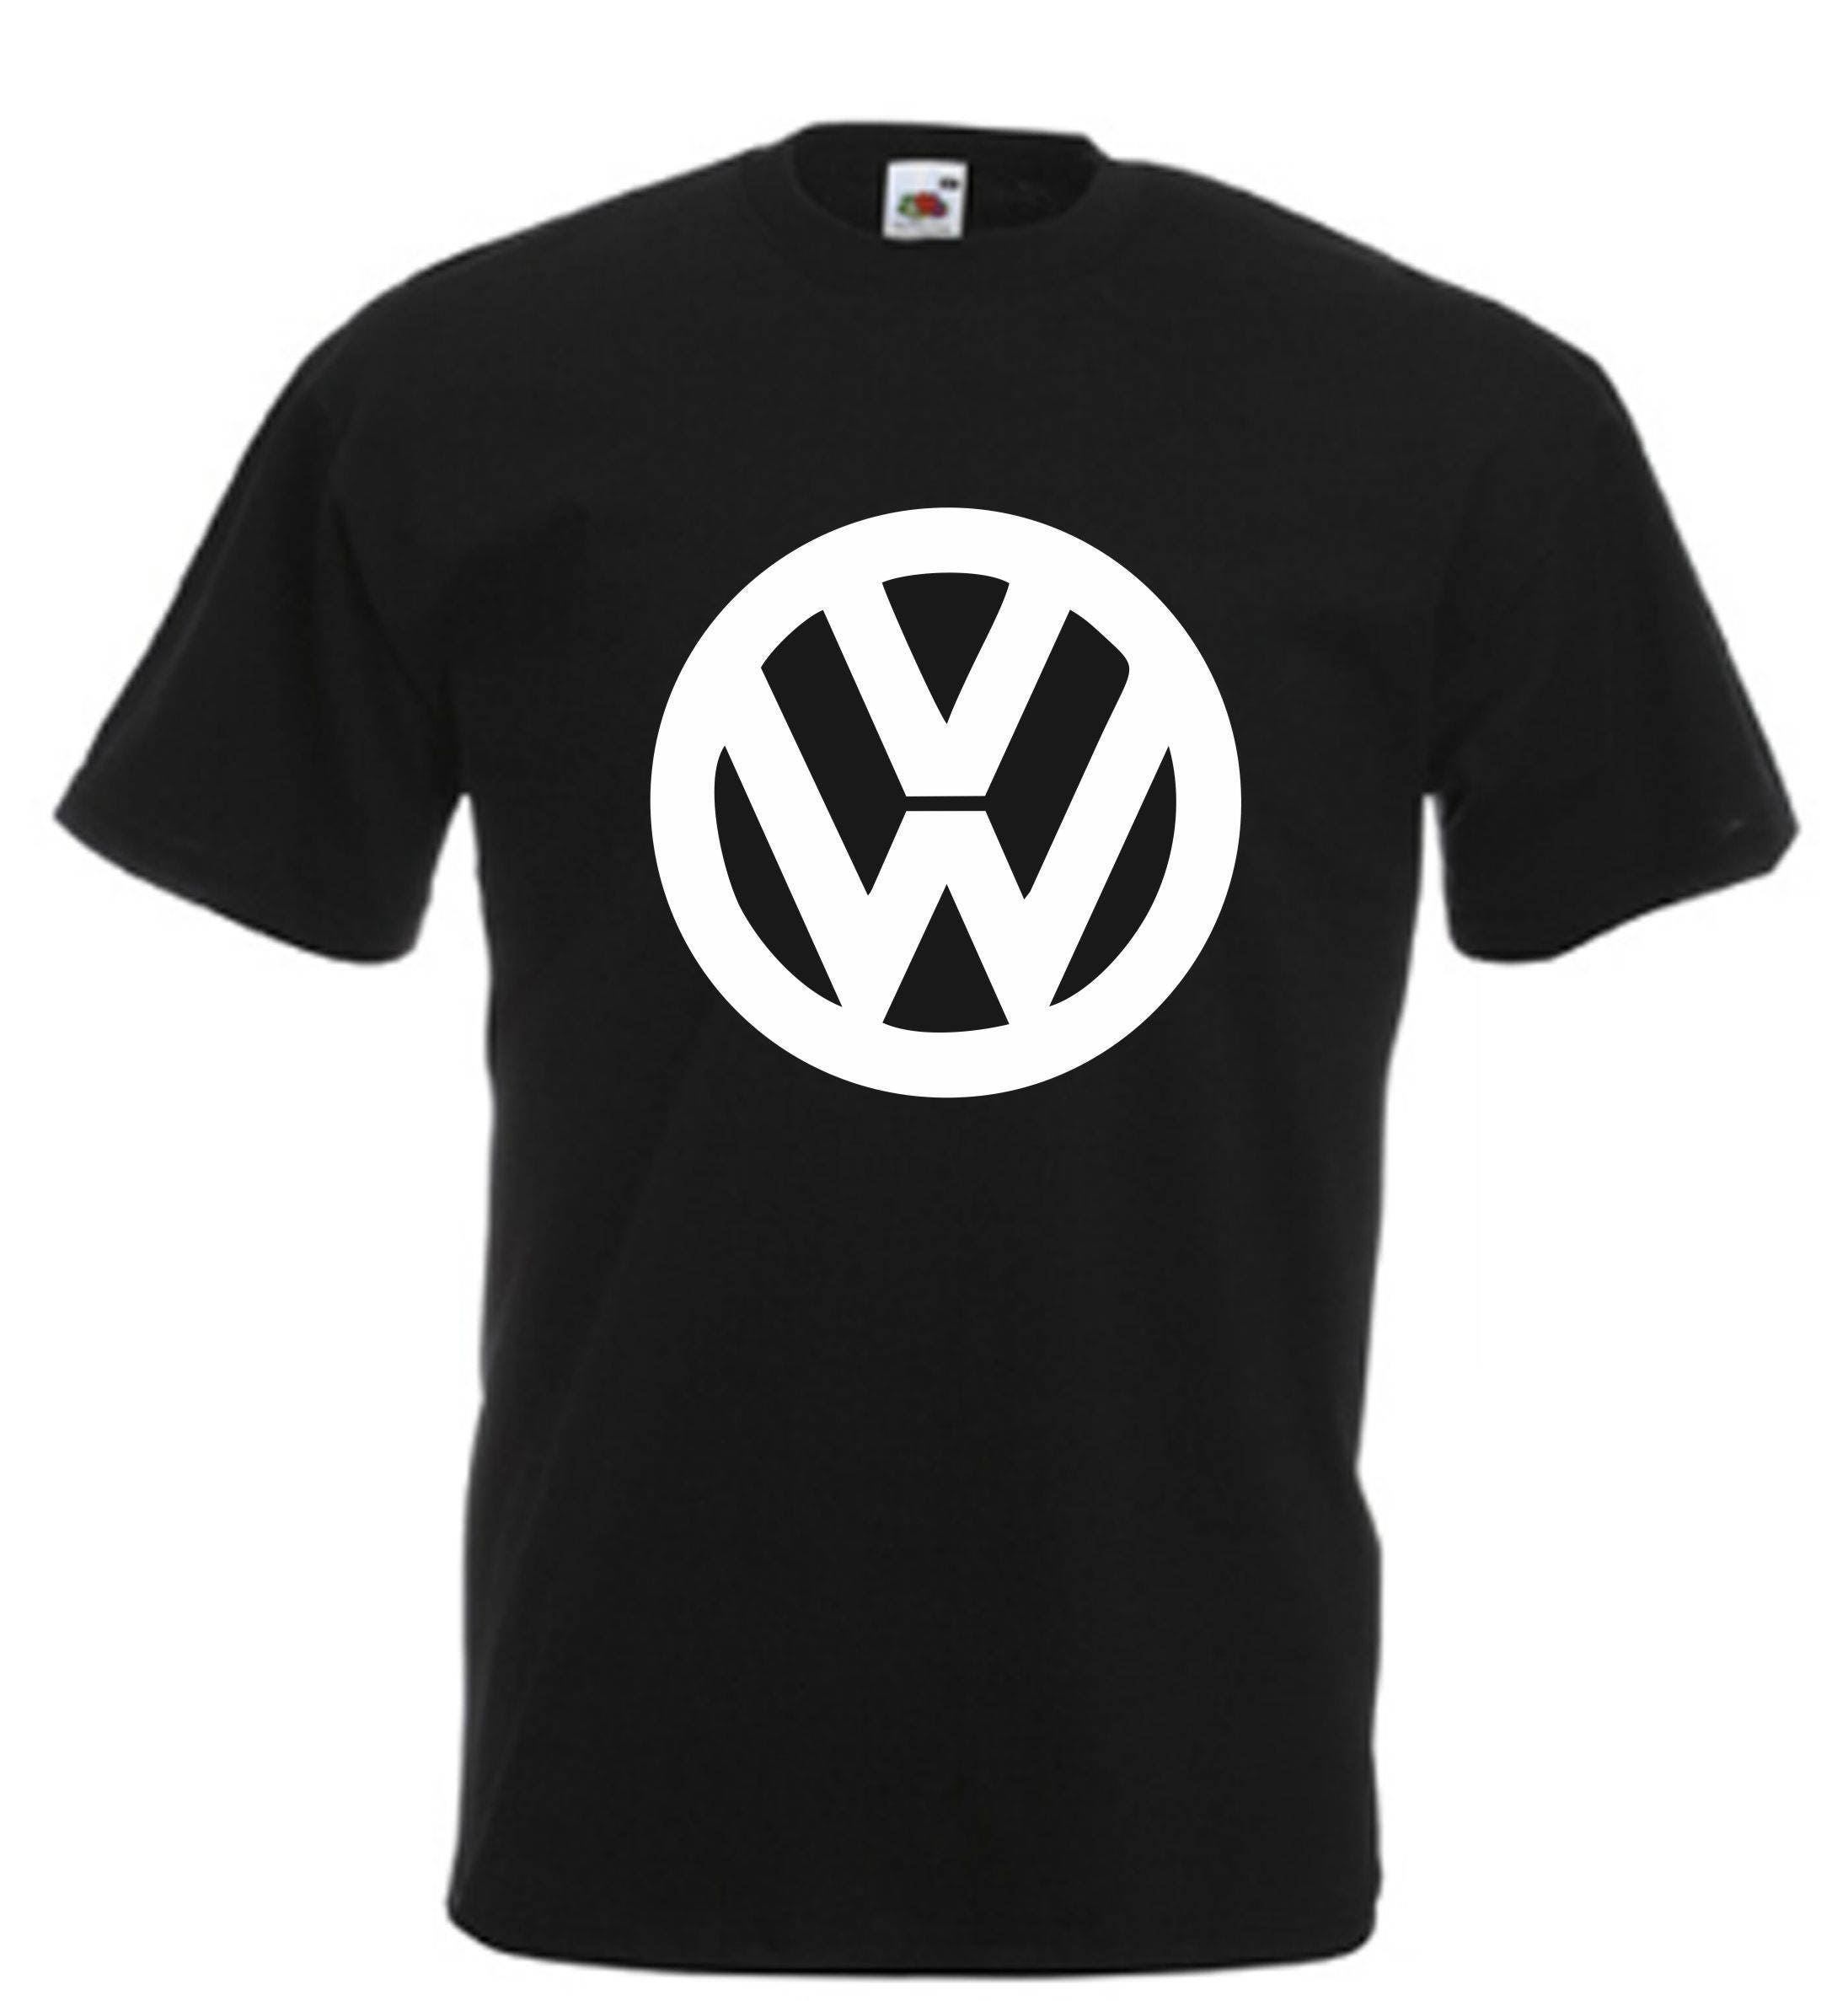 VW Logo T Shirt Novelty Slogan Birthday Xmas Gift Slogan Tee